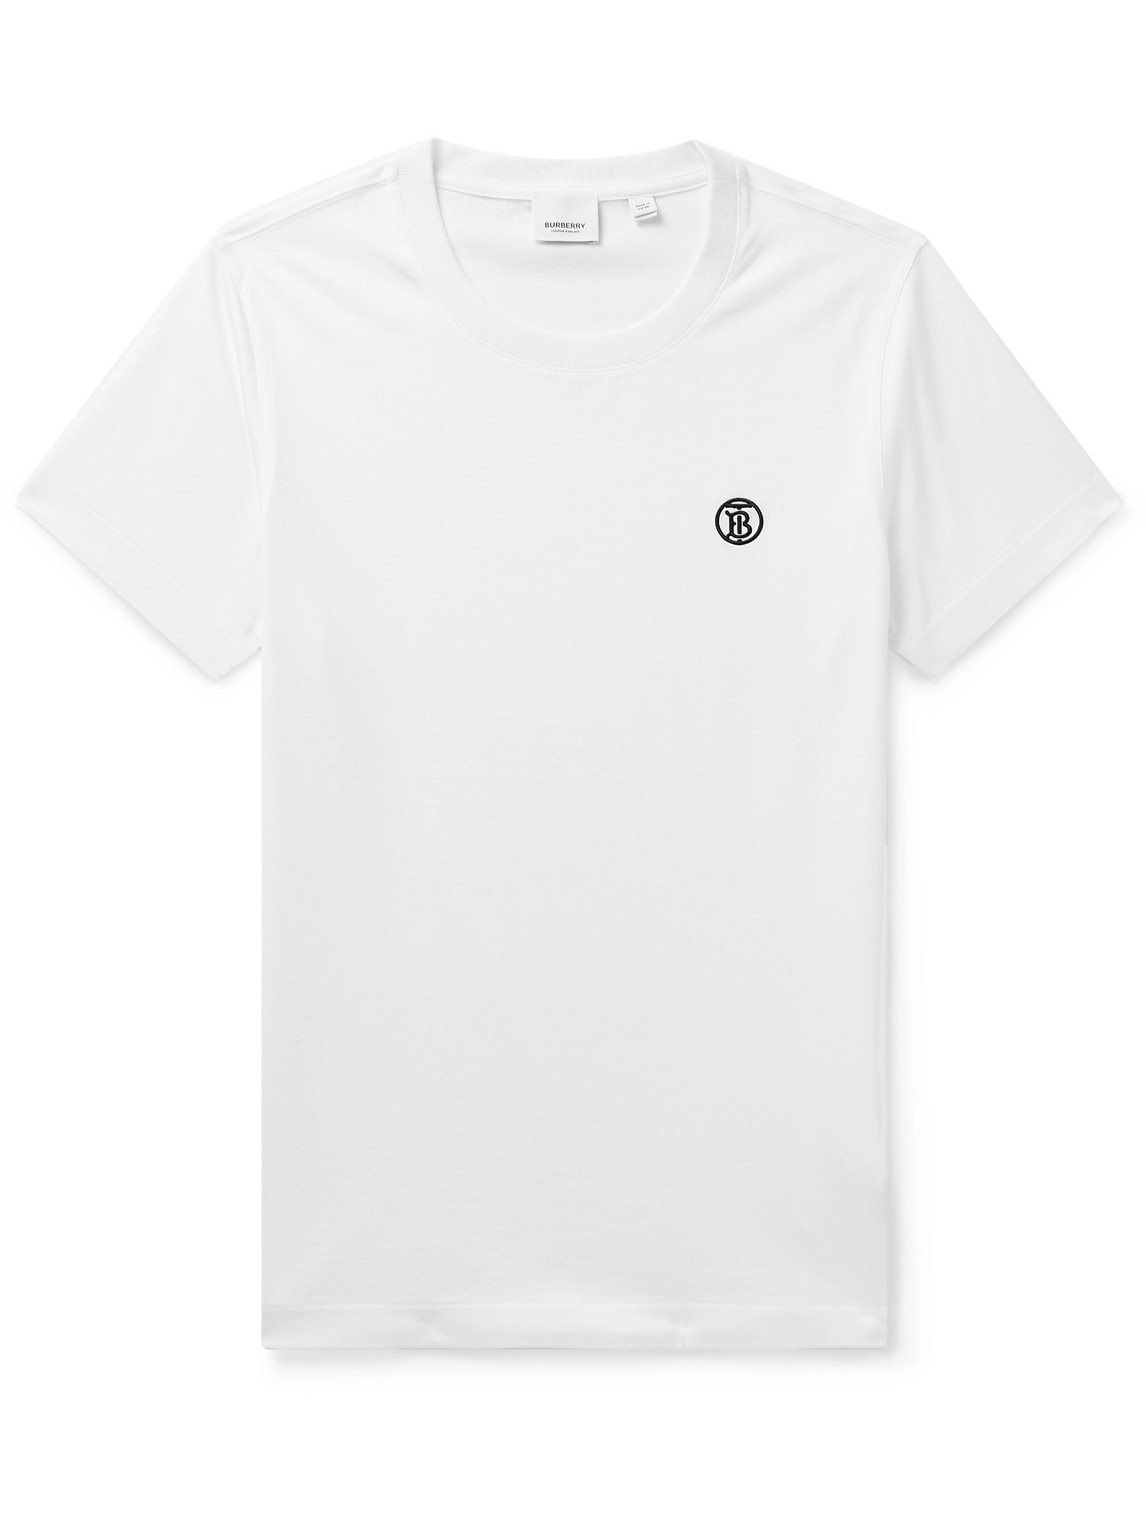 Burberry - Slim-Fit Logo-Embroidered Cotton-Jersey T-Shirt - Men - White - L von Burberry